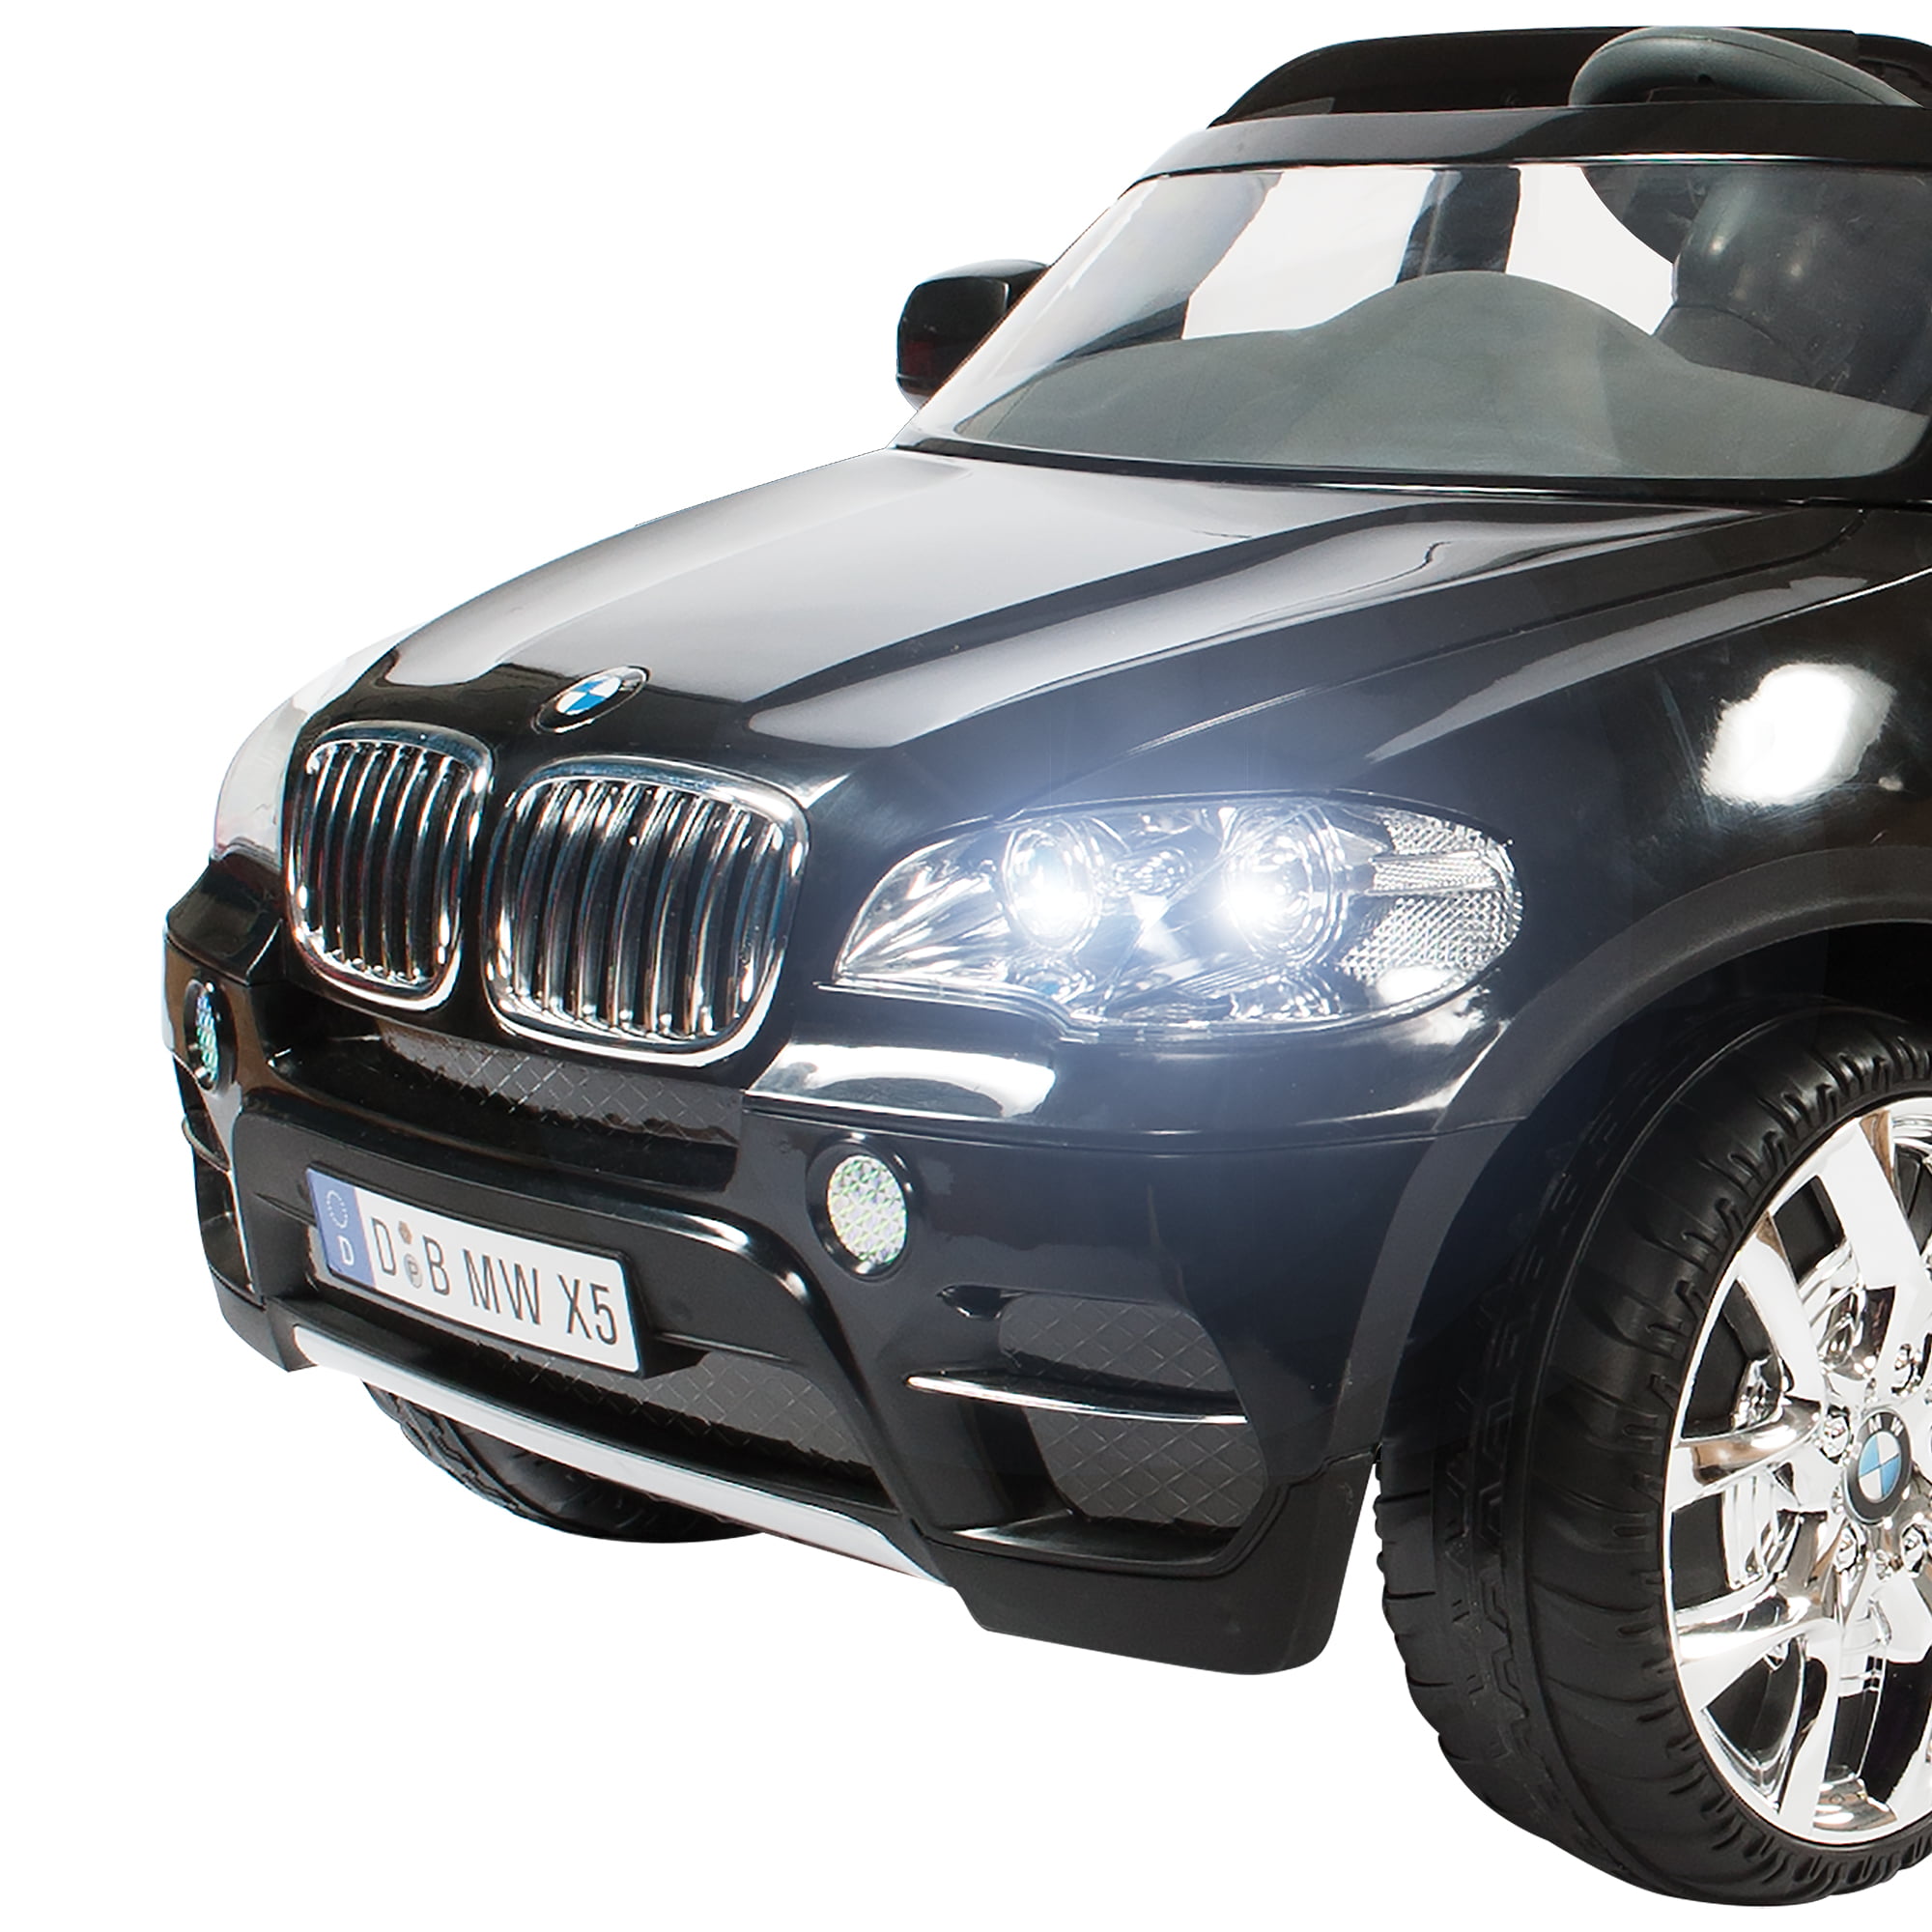 Rollplay BMW X5 6 Volt Battery-Powered Children's Ride-On Toy